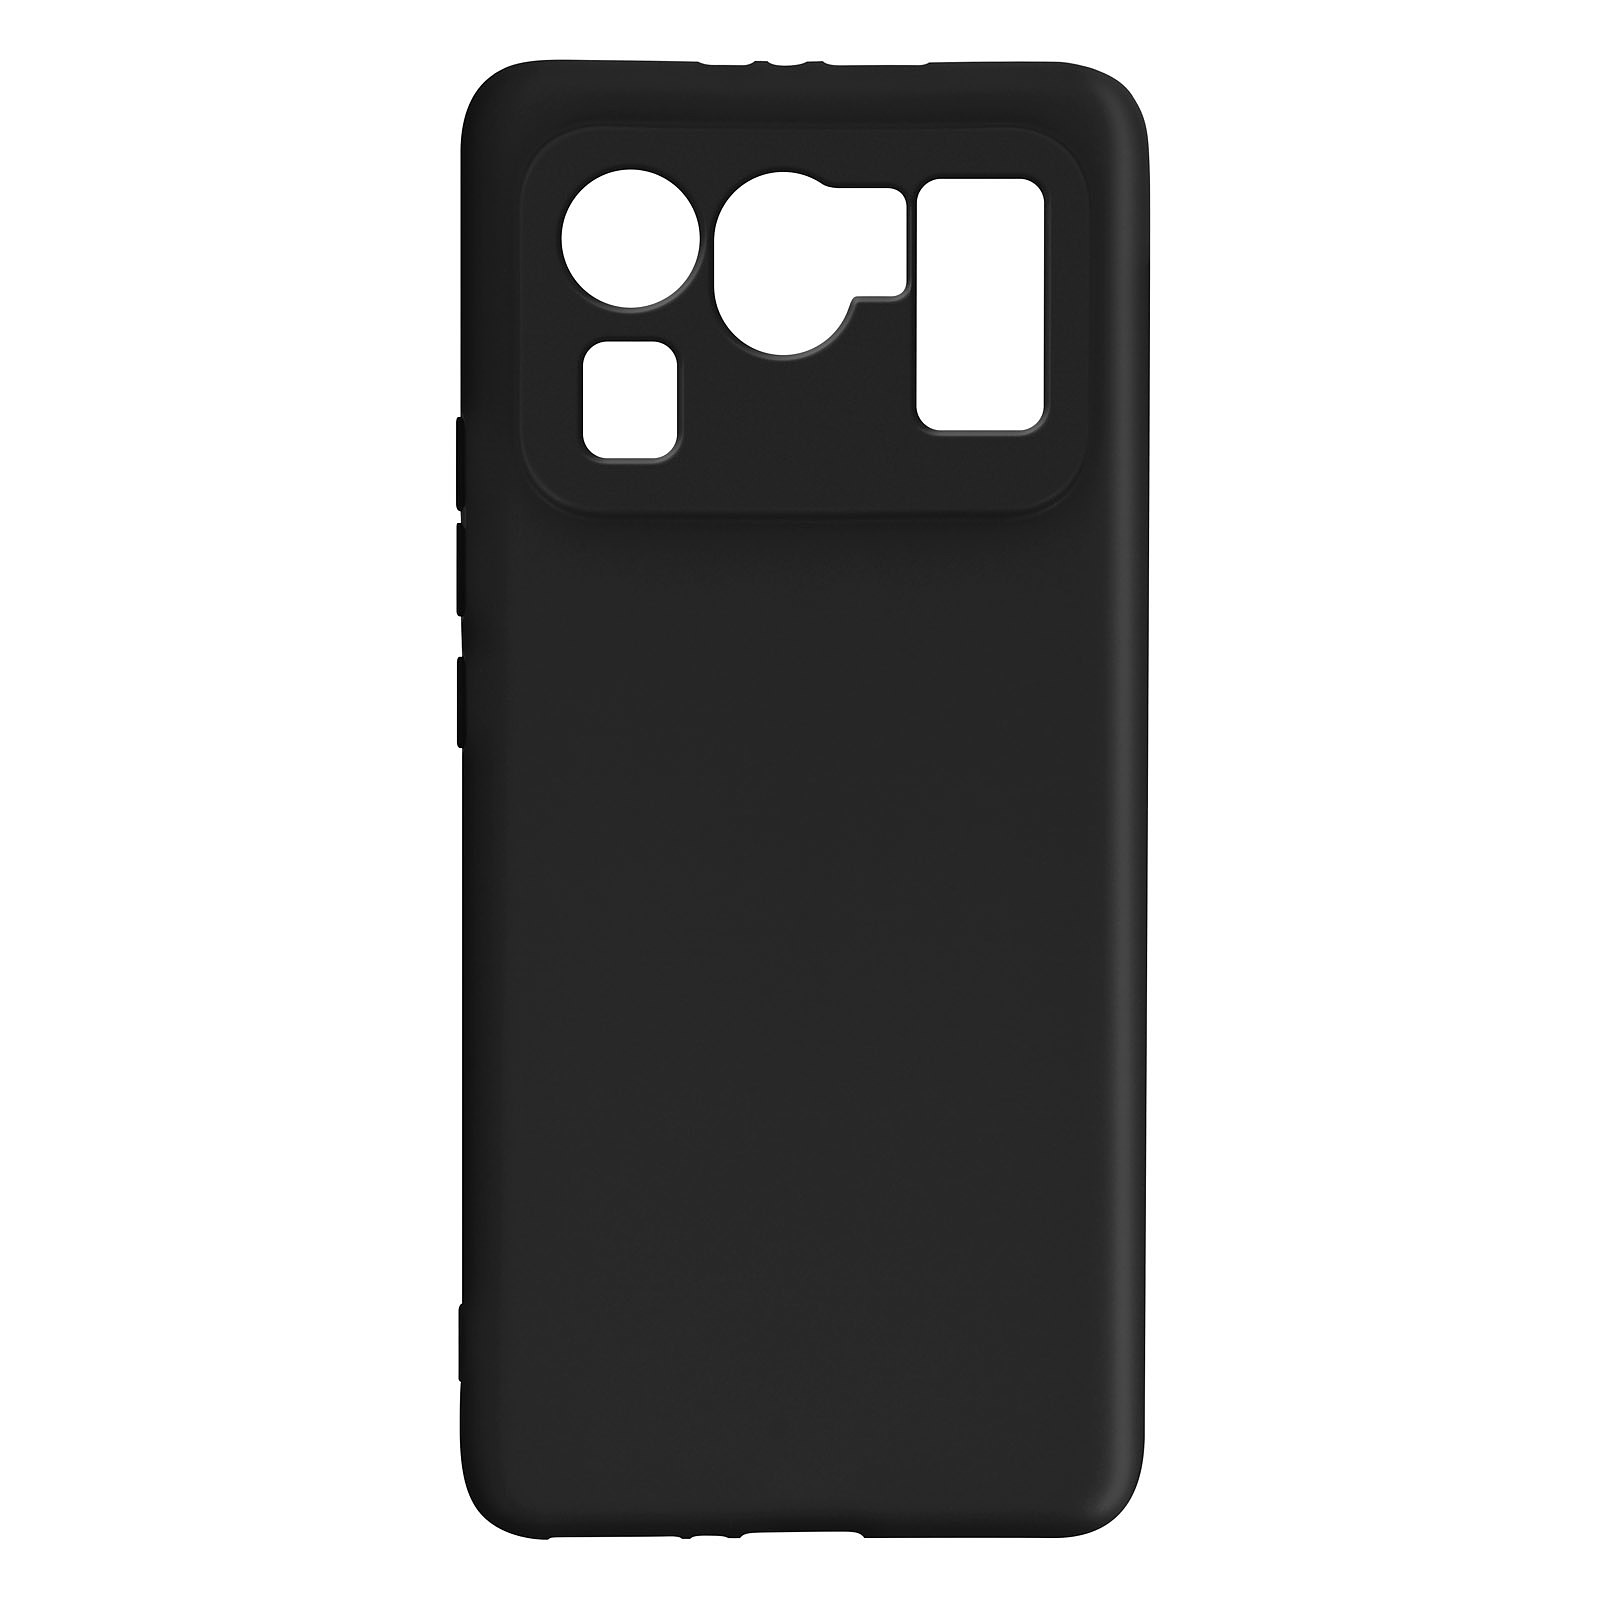 Avizar Coque pour Xiaomi Mi 11 Ultra 5G Souple Flexible Antichoc Finition Mat Noir - Coque telephone Avizar